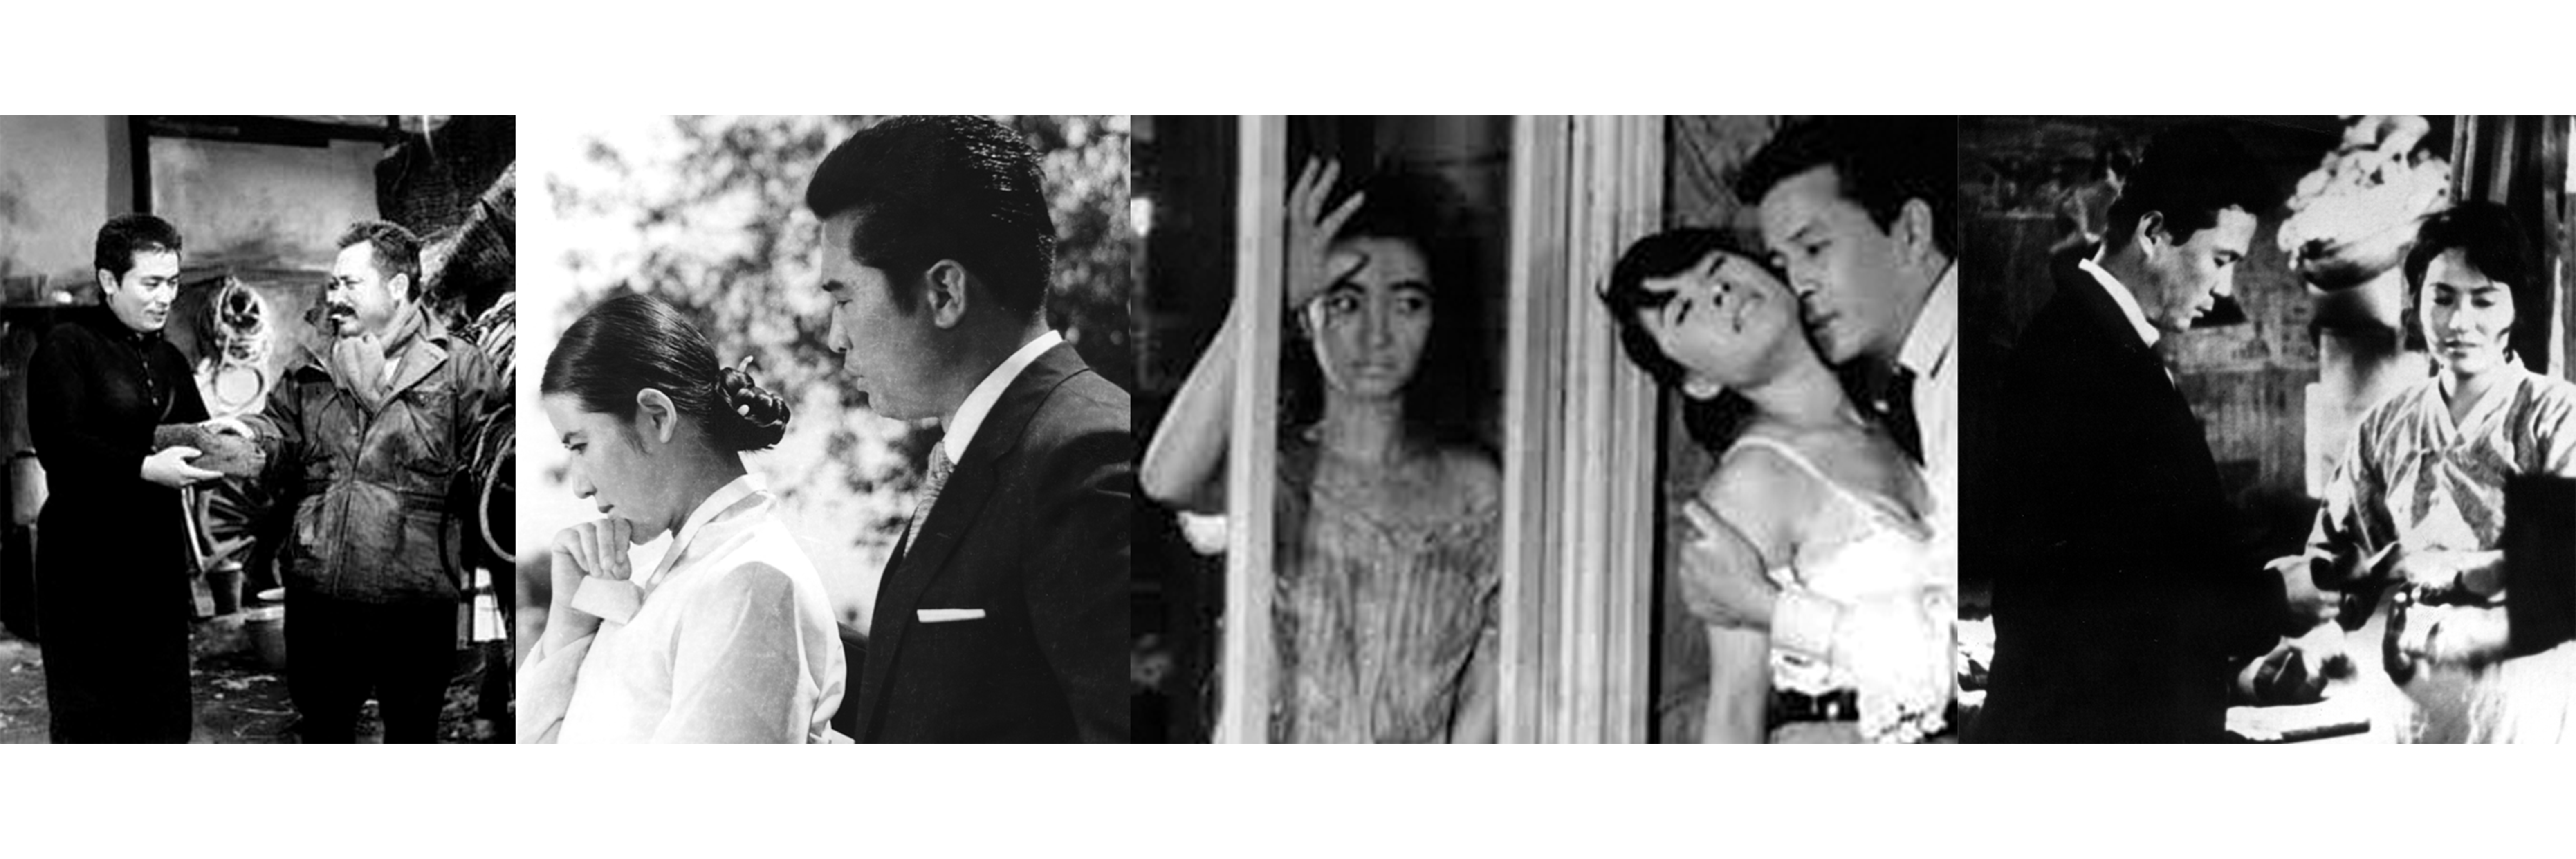 Film stills: The Coachmen, Kang Dae-jin, 1961; Mother and a Guest, Shin Sang-ok, 1961; The Housemaid, Kim Ki-young, 1960; and Aimless Bullet, Yu Hyun-mok, 1960. 